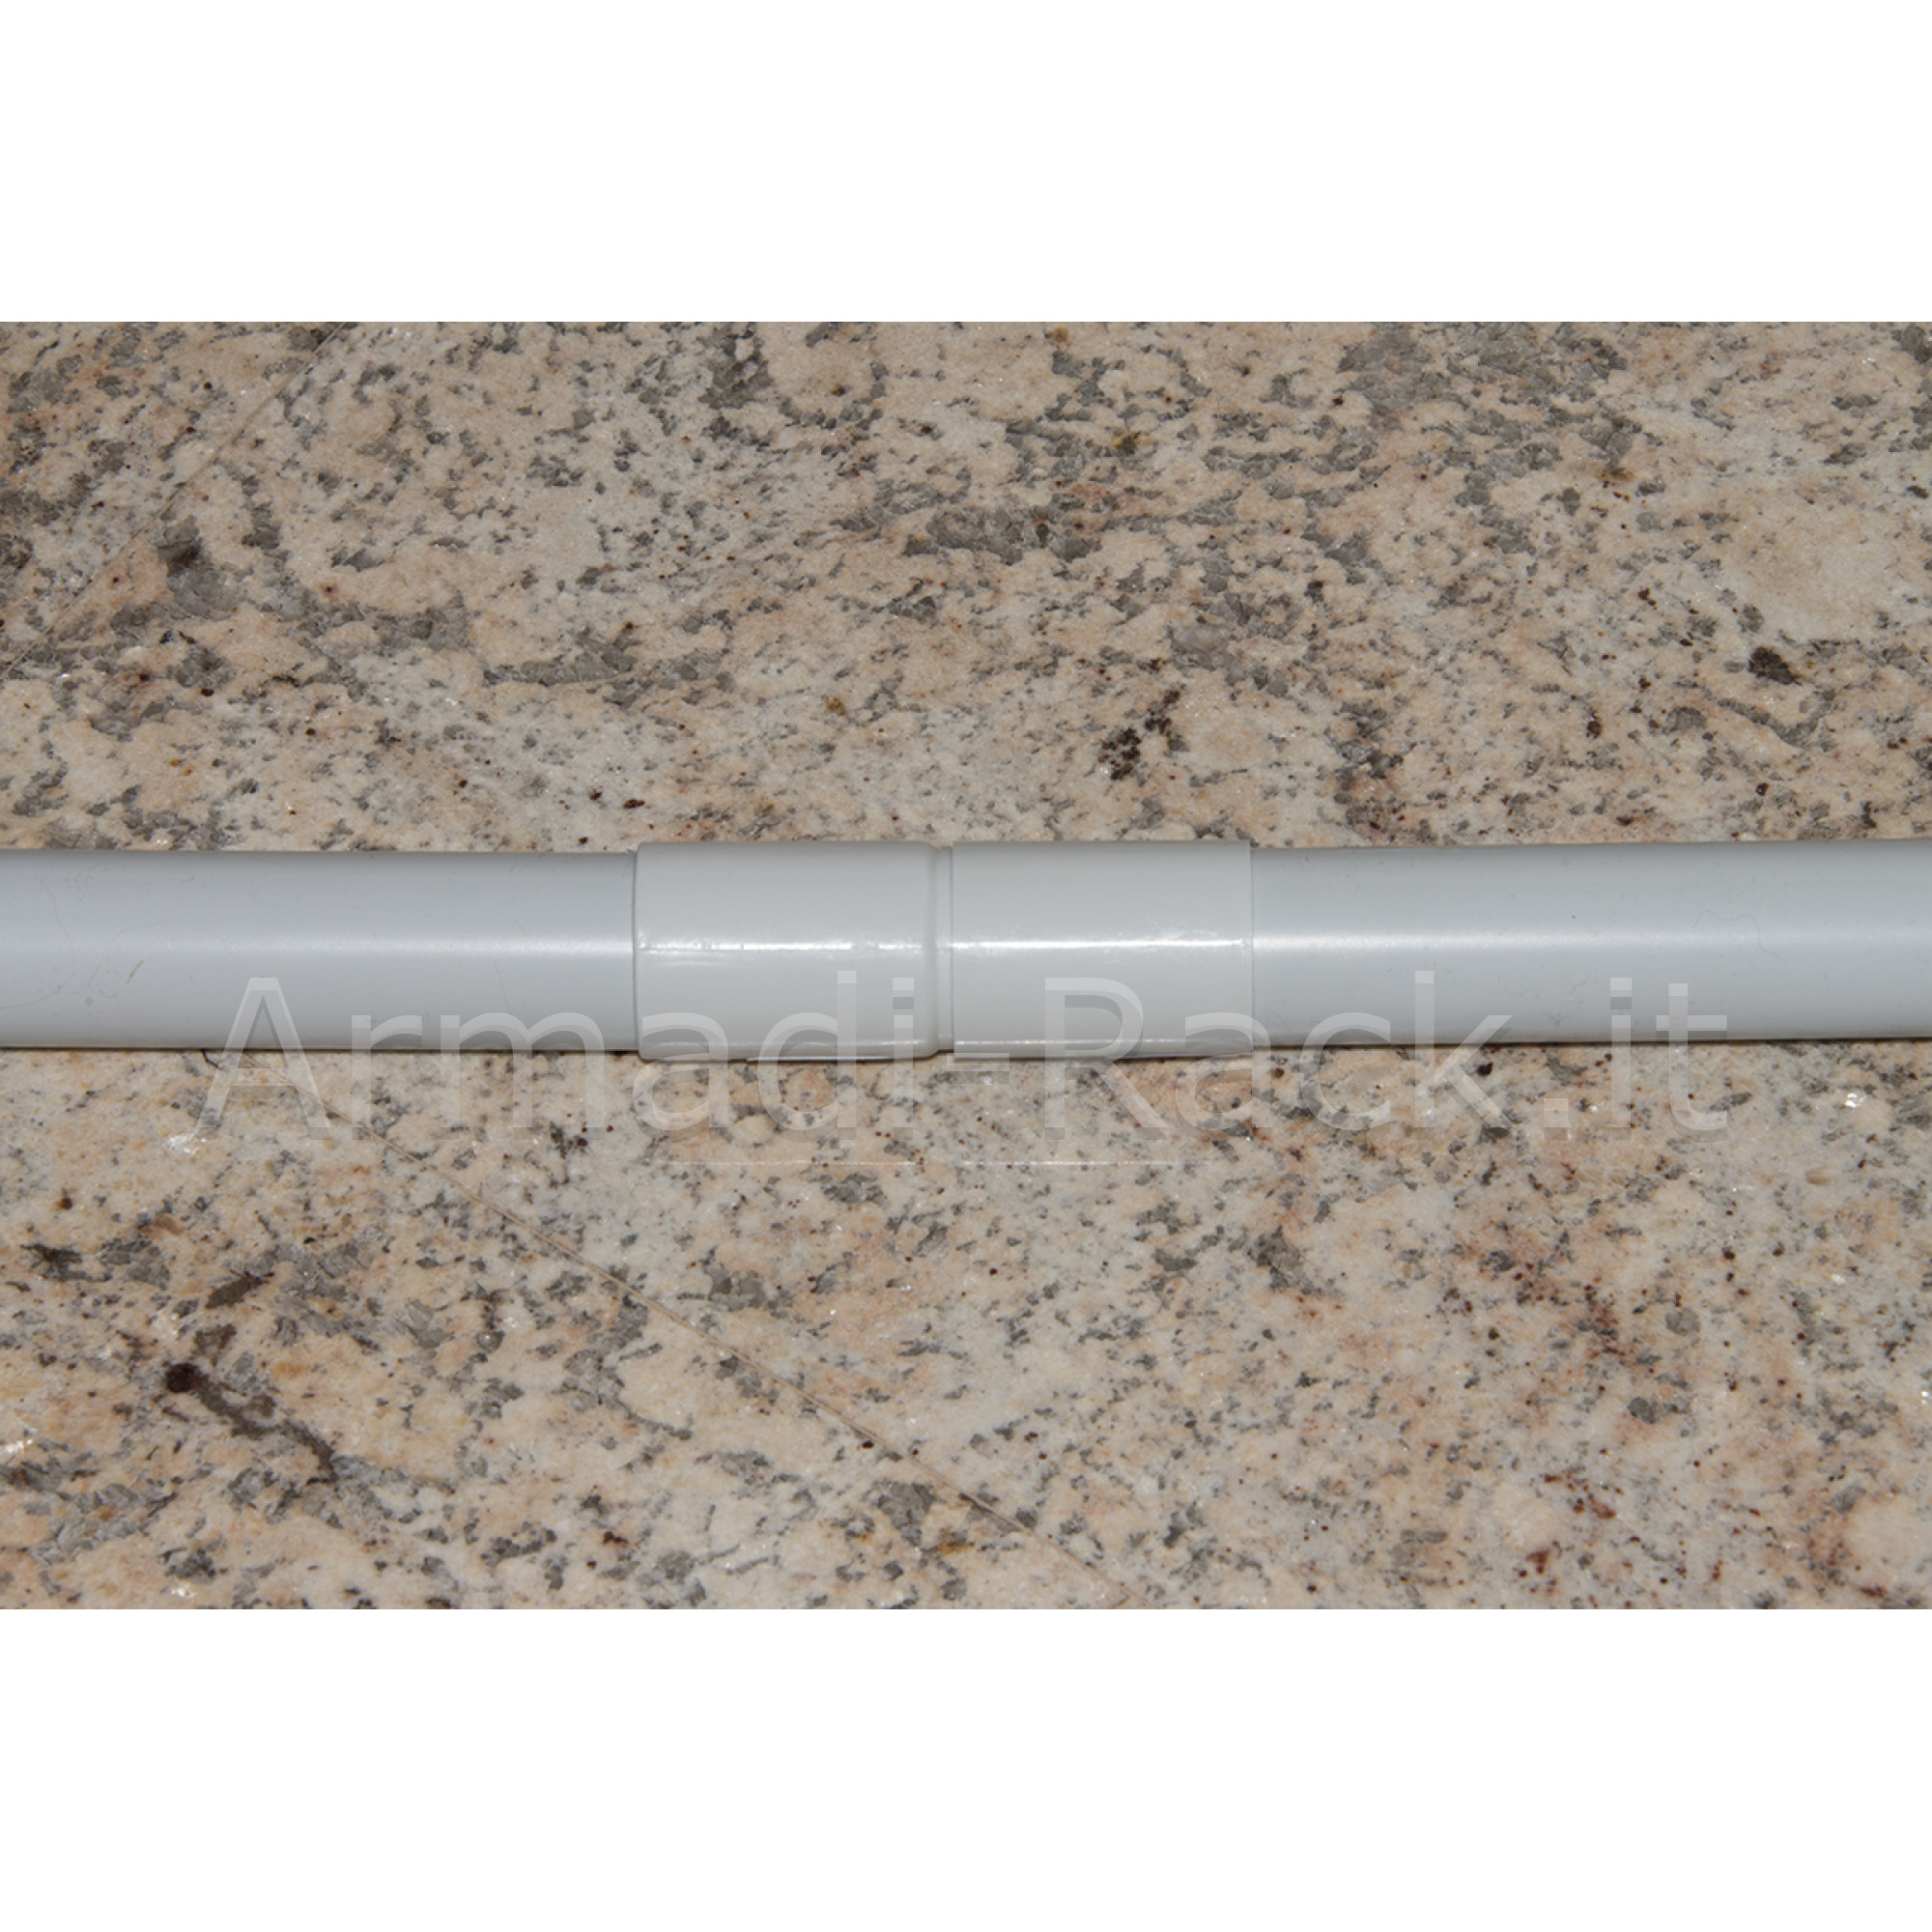 Giunzione per 2 tubi di condotta diametro 32 mm pvc lk80432 (2)